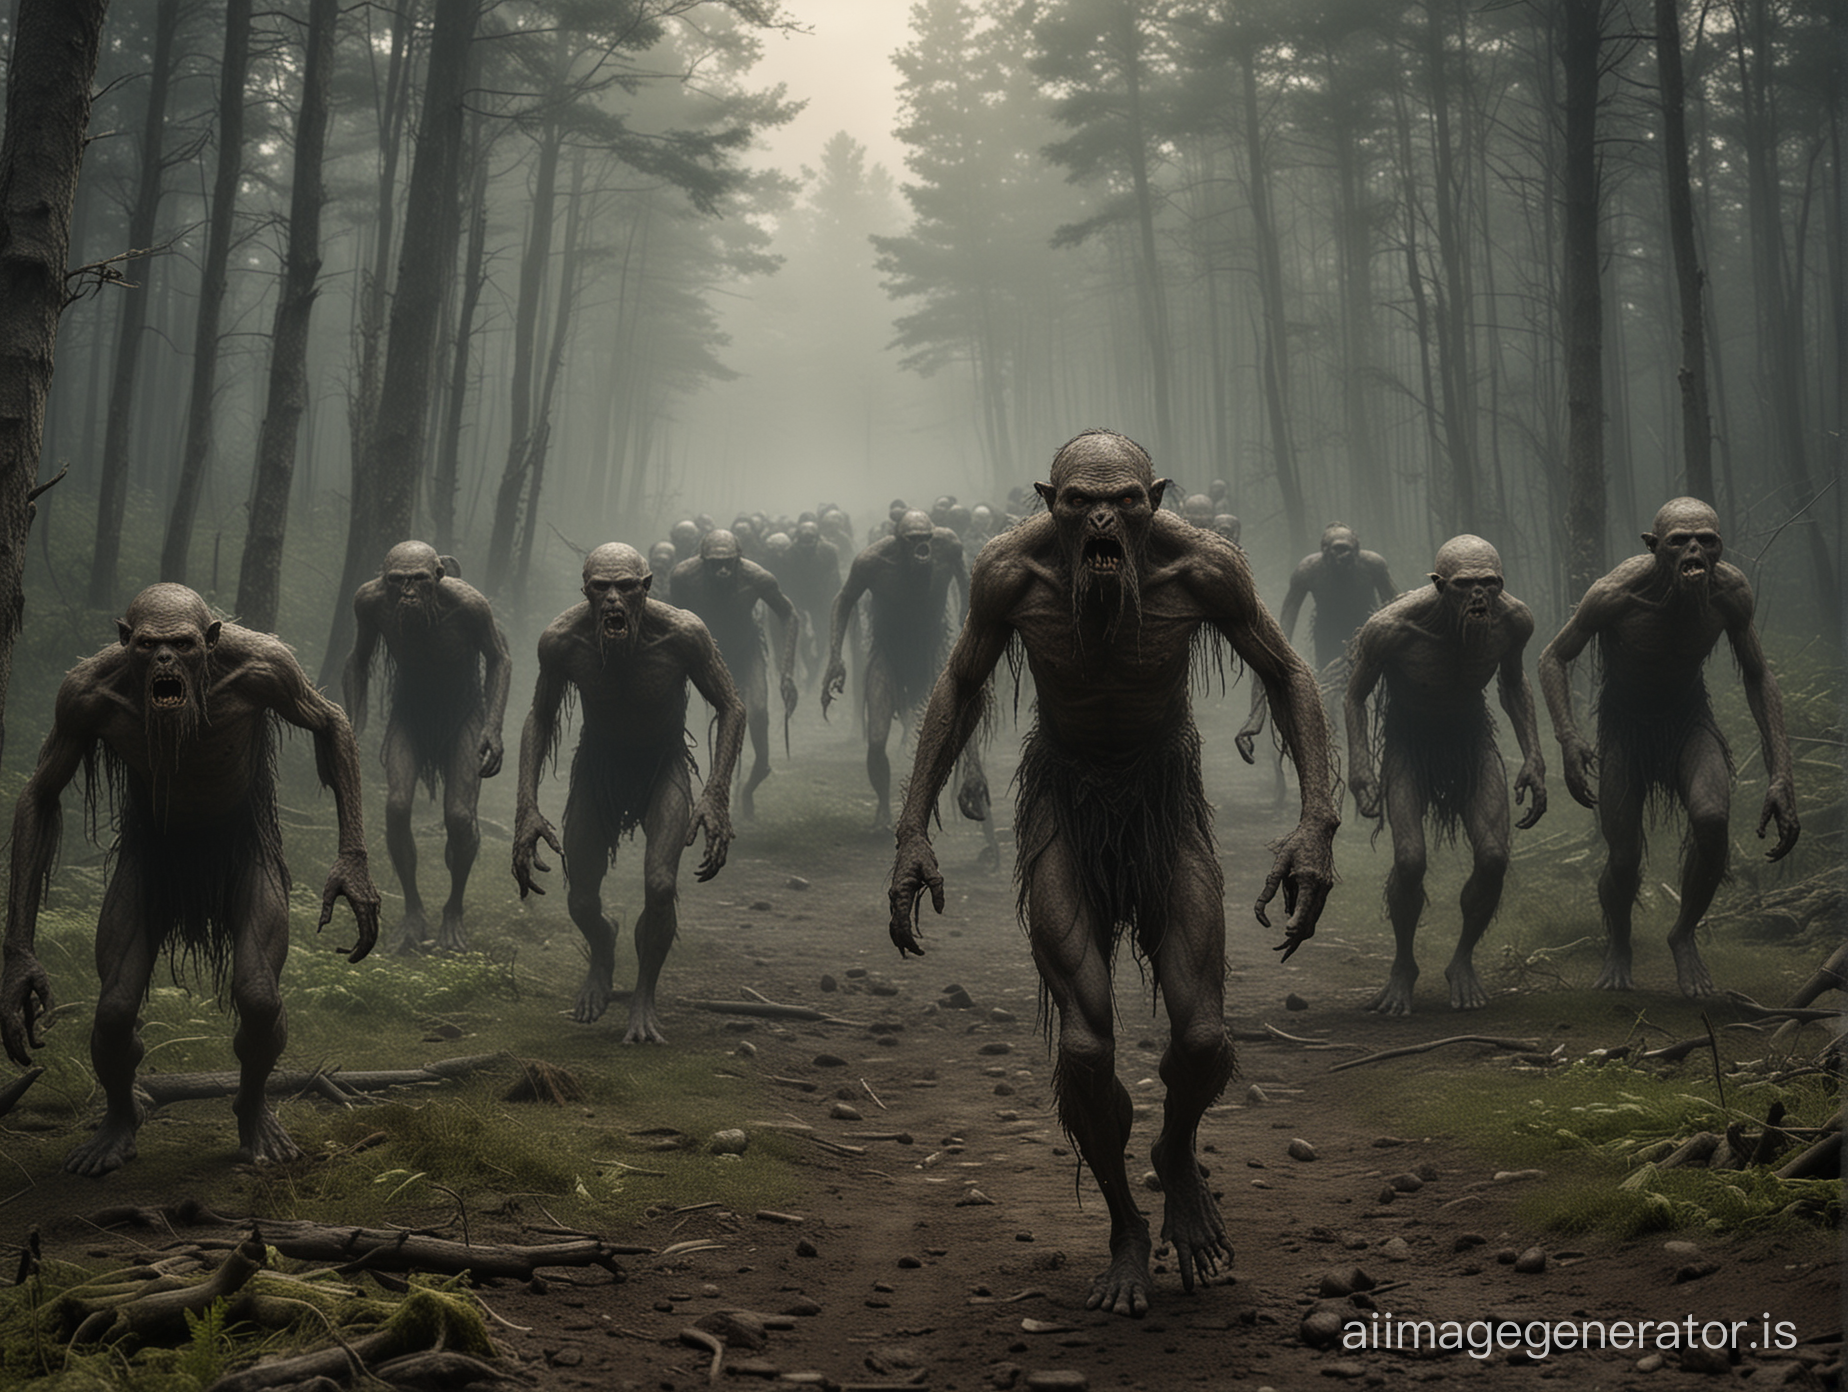 a race of ancient prehuman creatures inhabitants f the forest, horror, eerie, creepy, dark, gory,, beksinsky
